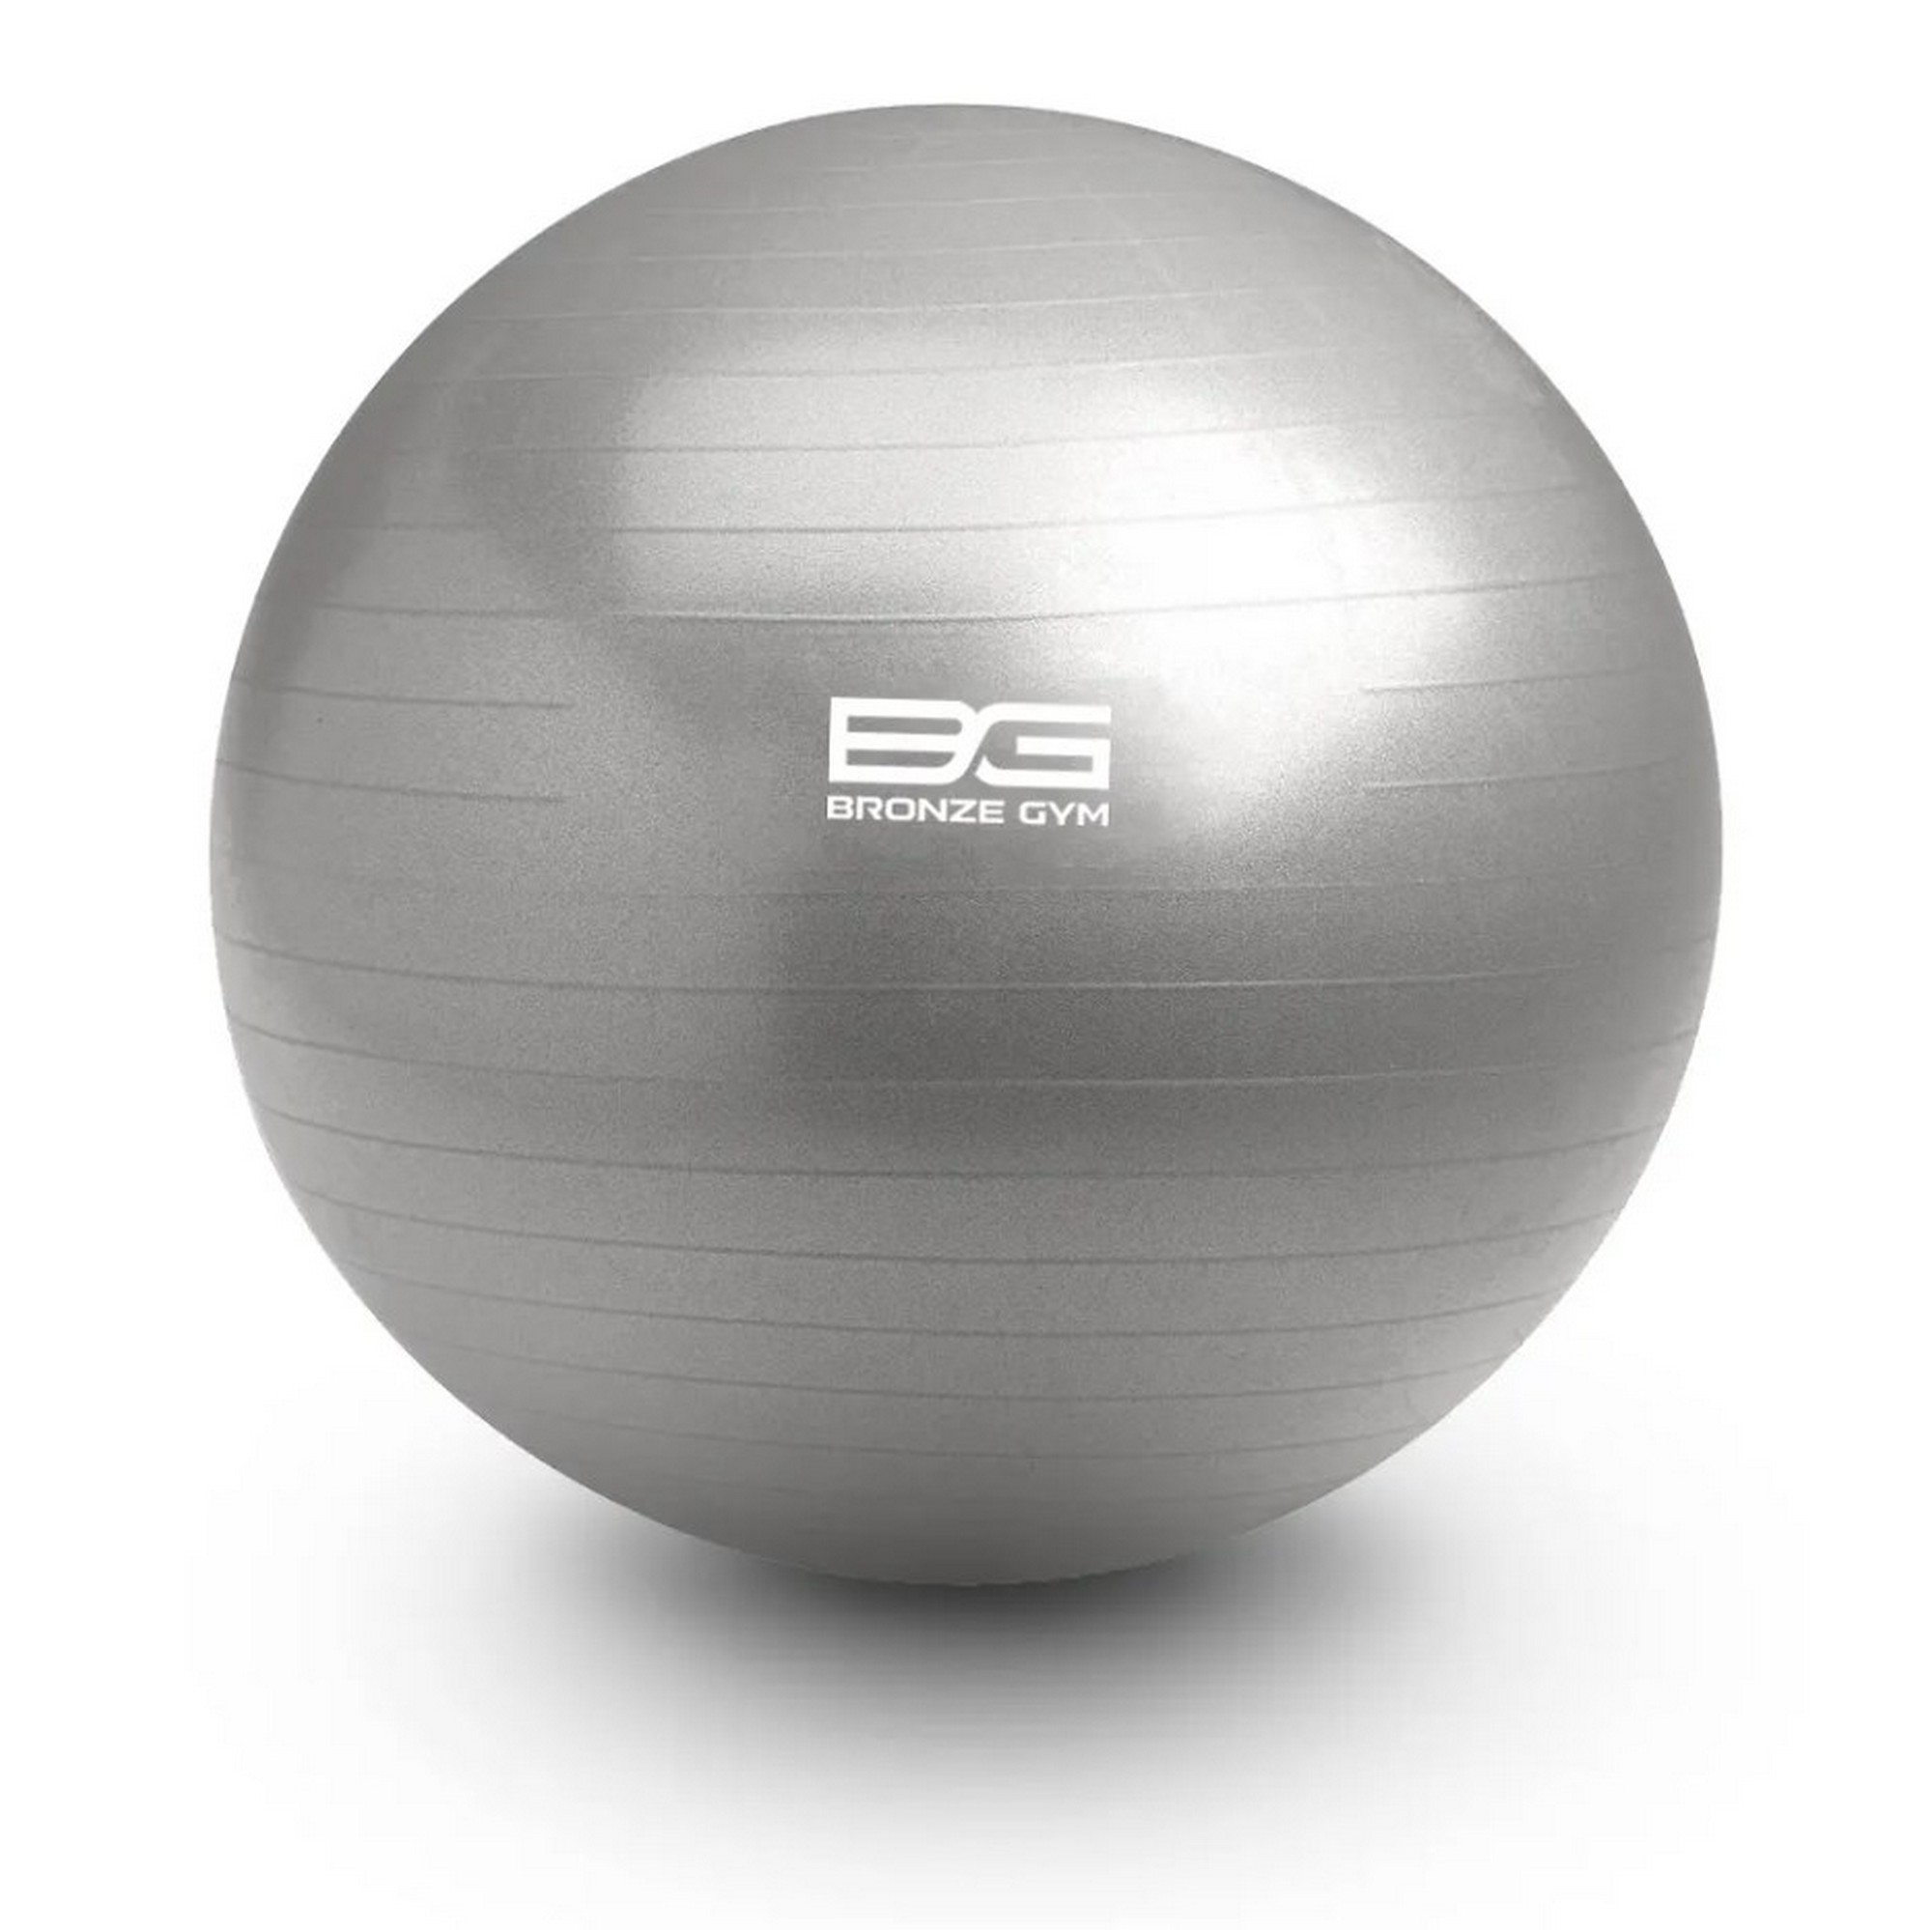   d65 Bronze Gym GYM BALL ANTI-BURST BG-FA-GB65